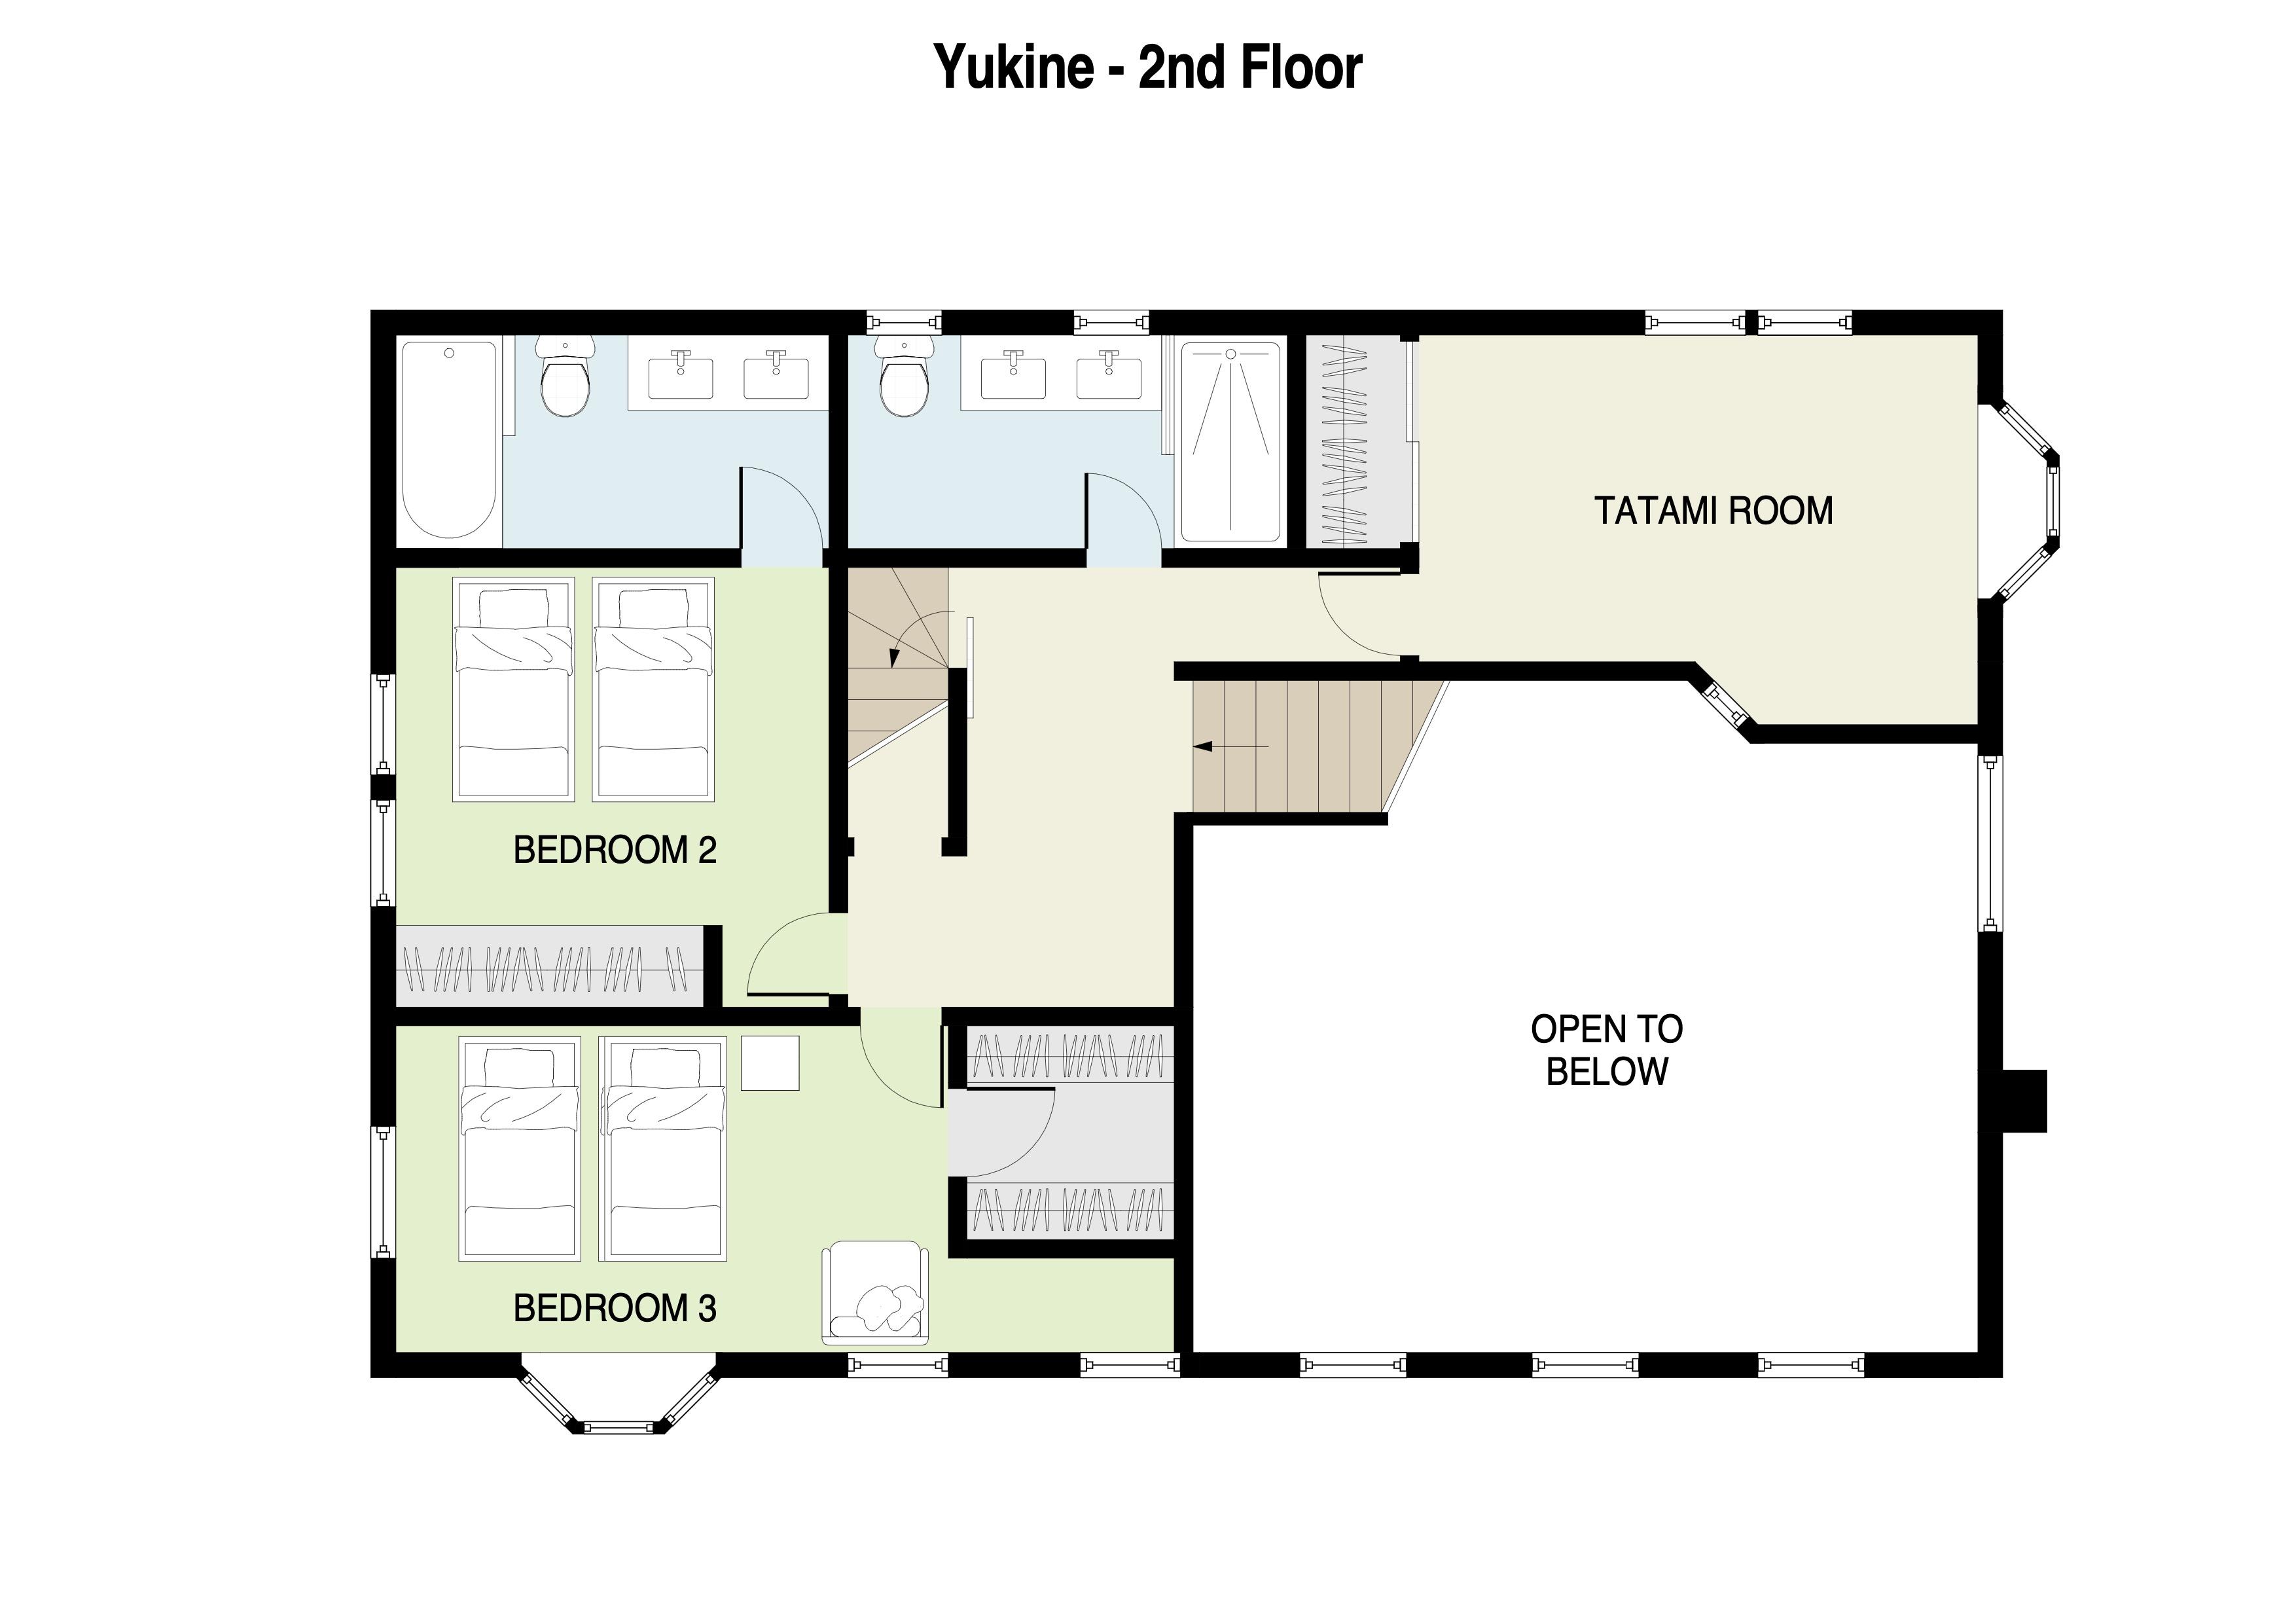 Yukine 2nd floor plans